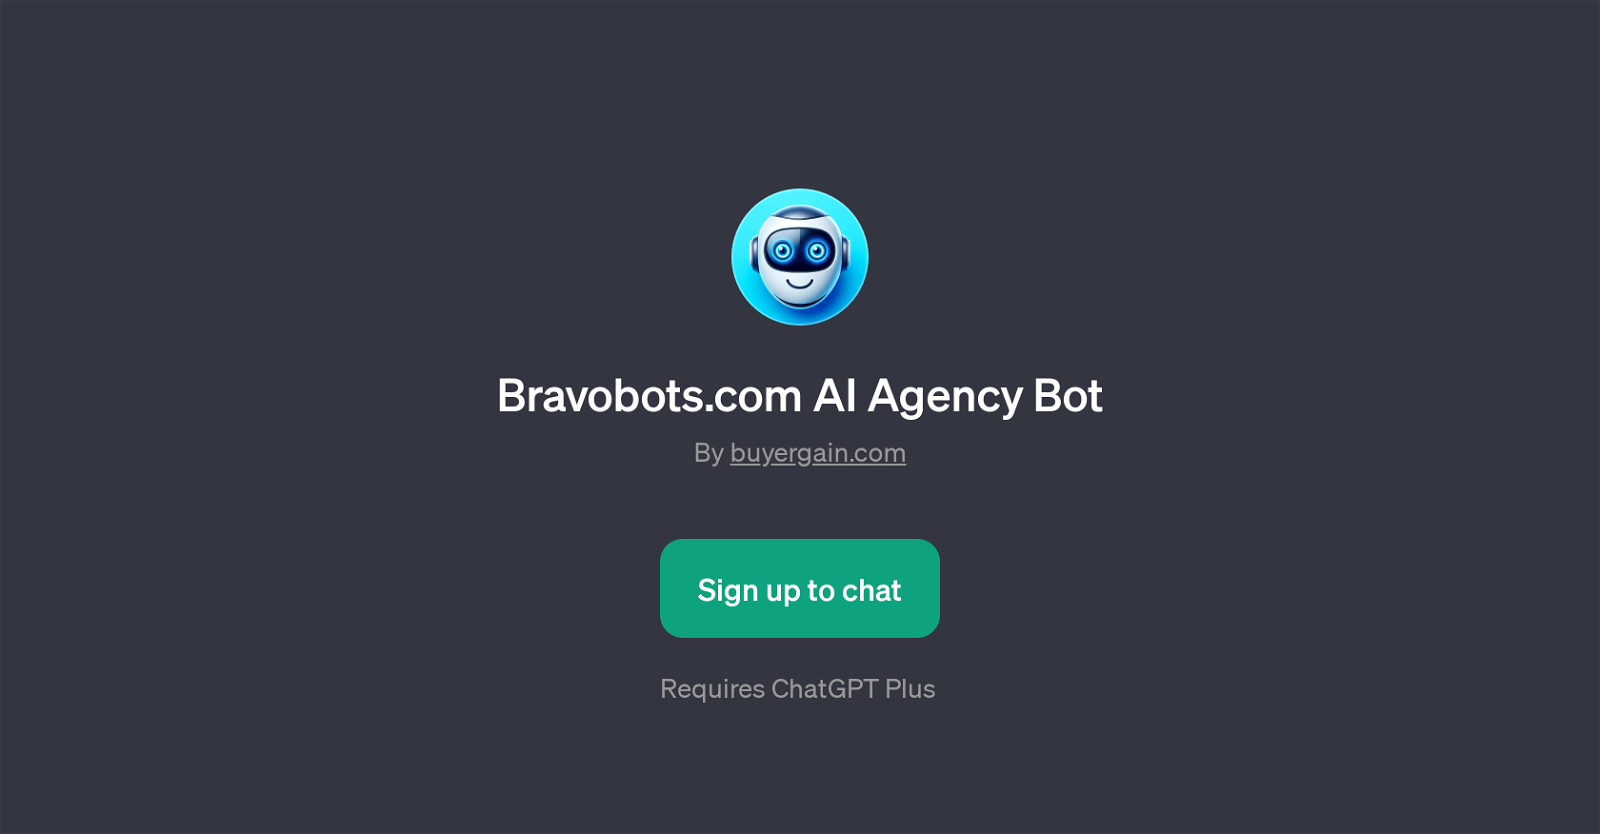 Bravobots.com AI Agency Bot website